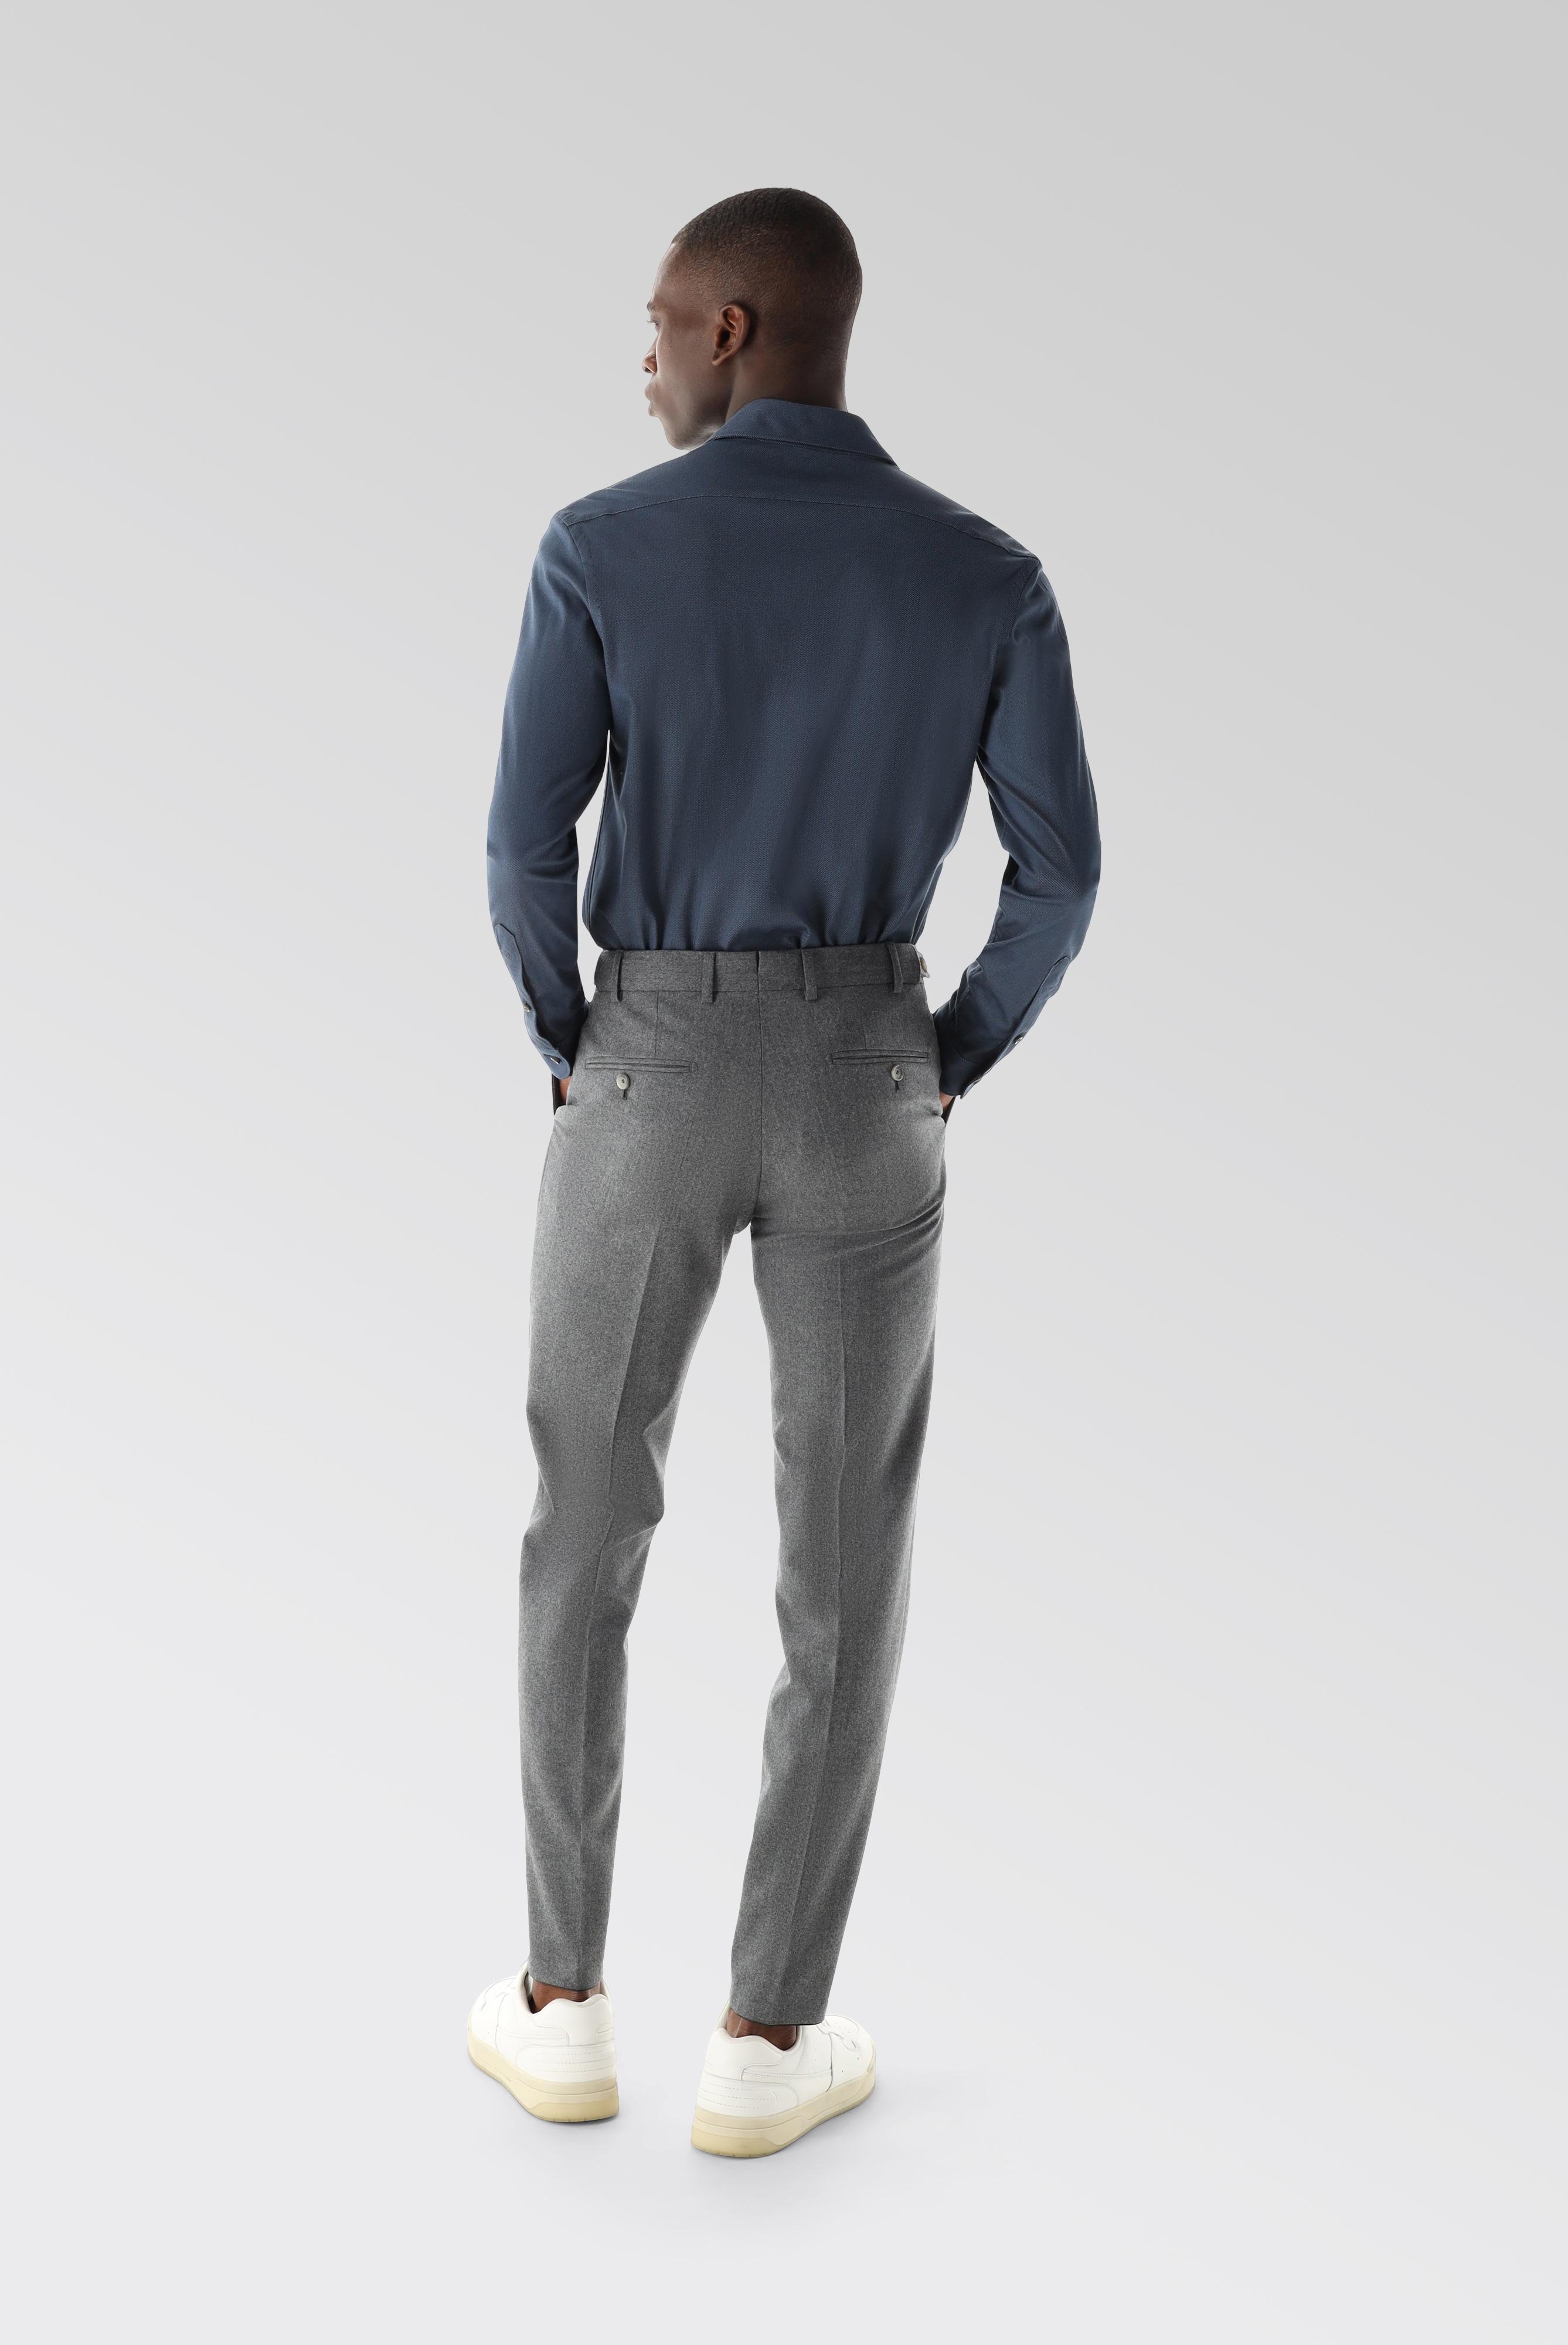 Casual Hemden+Jersey Hemd mit Twill Druck Tailor Fit+20.1683.UC.187749.782.S